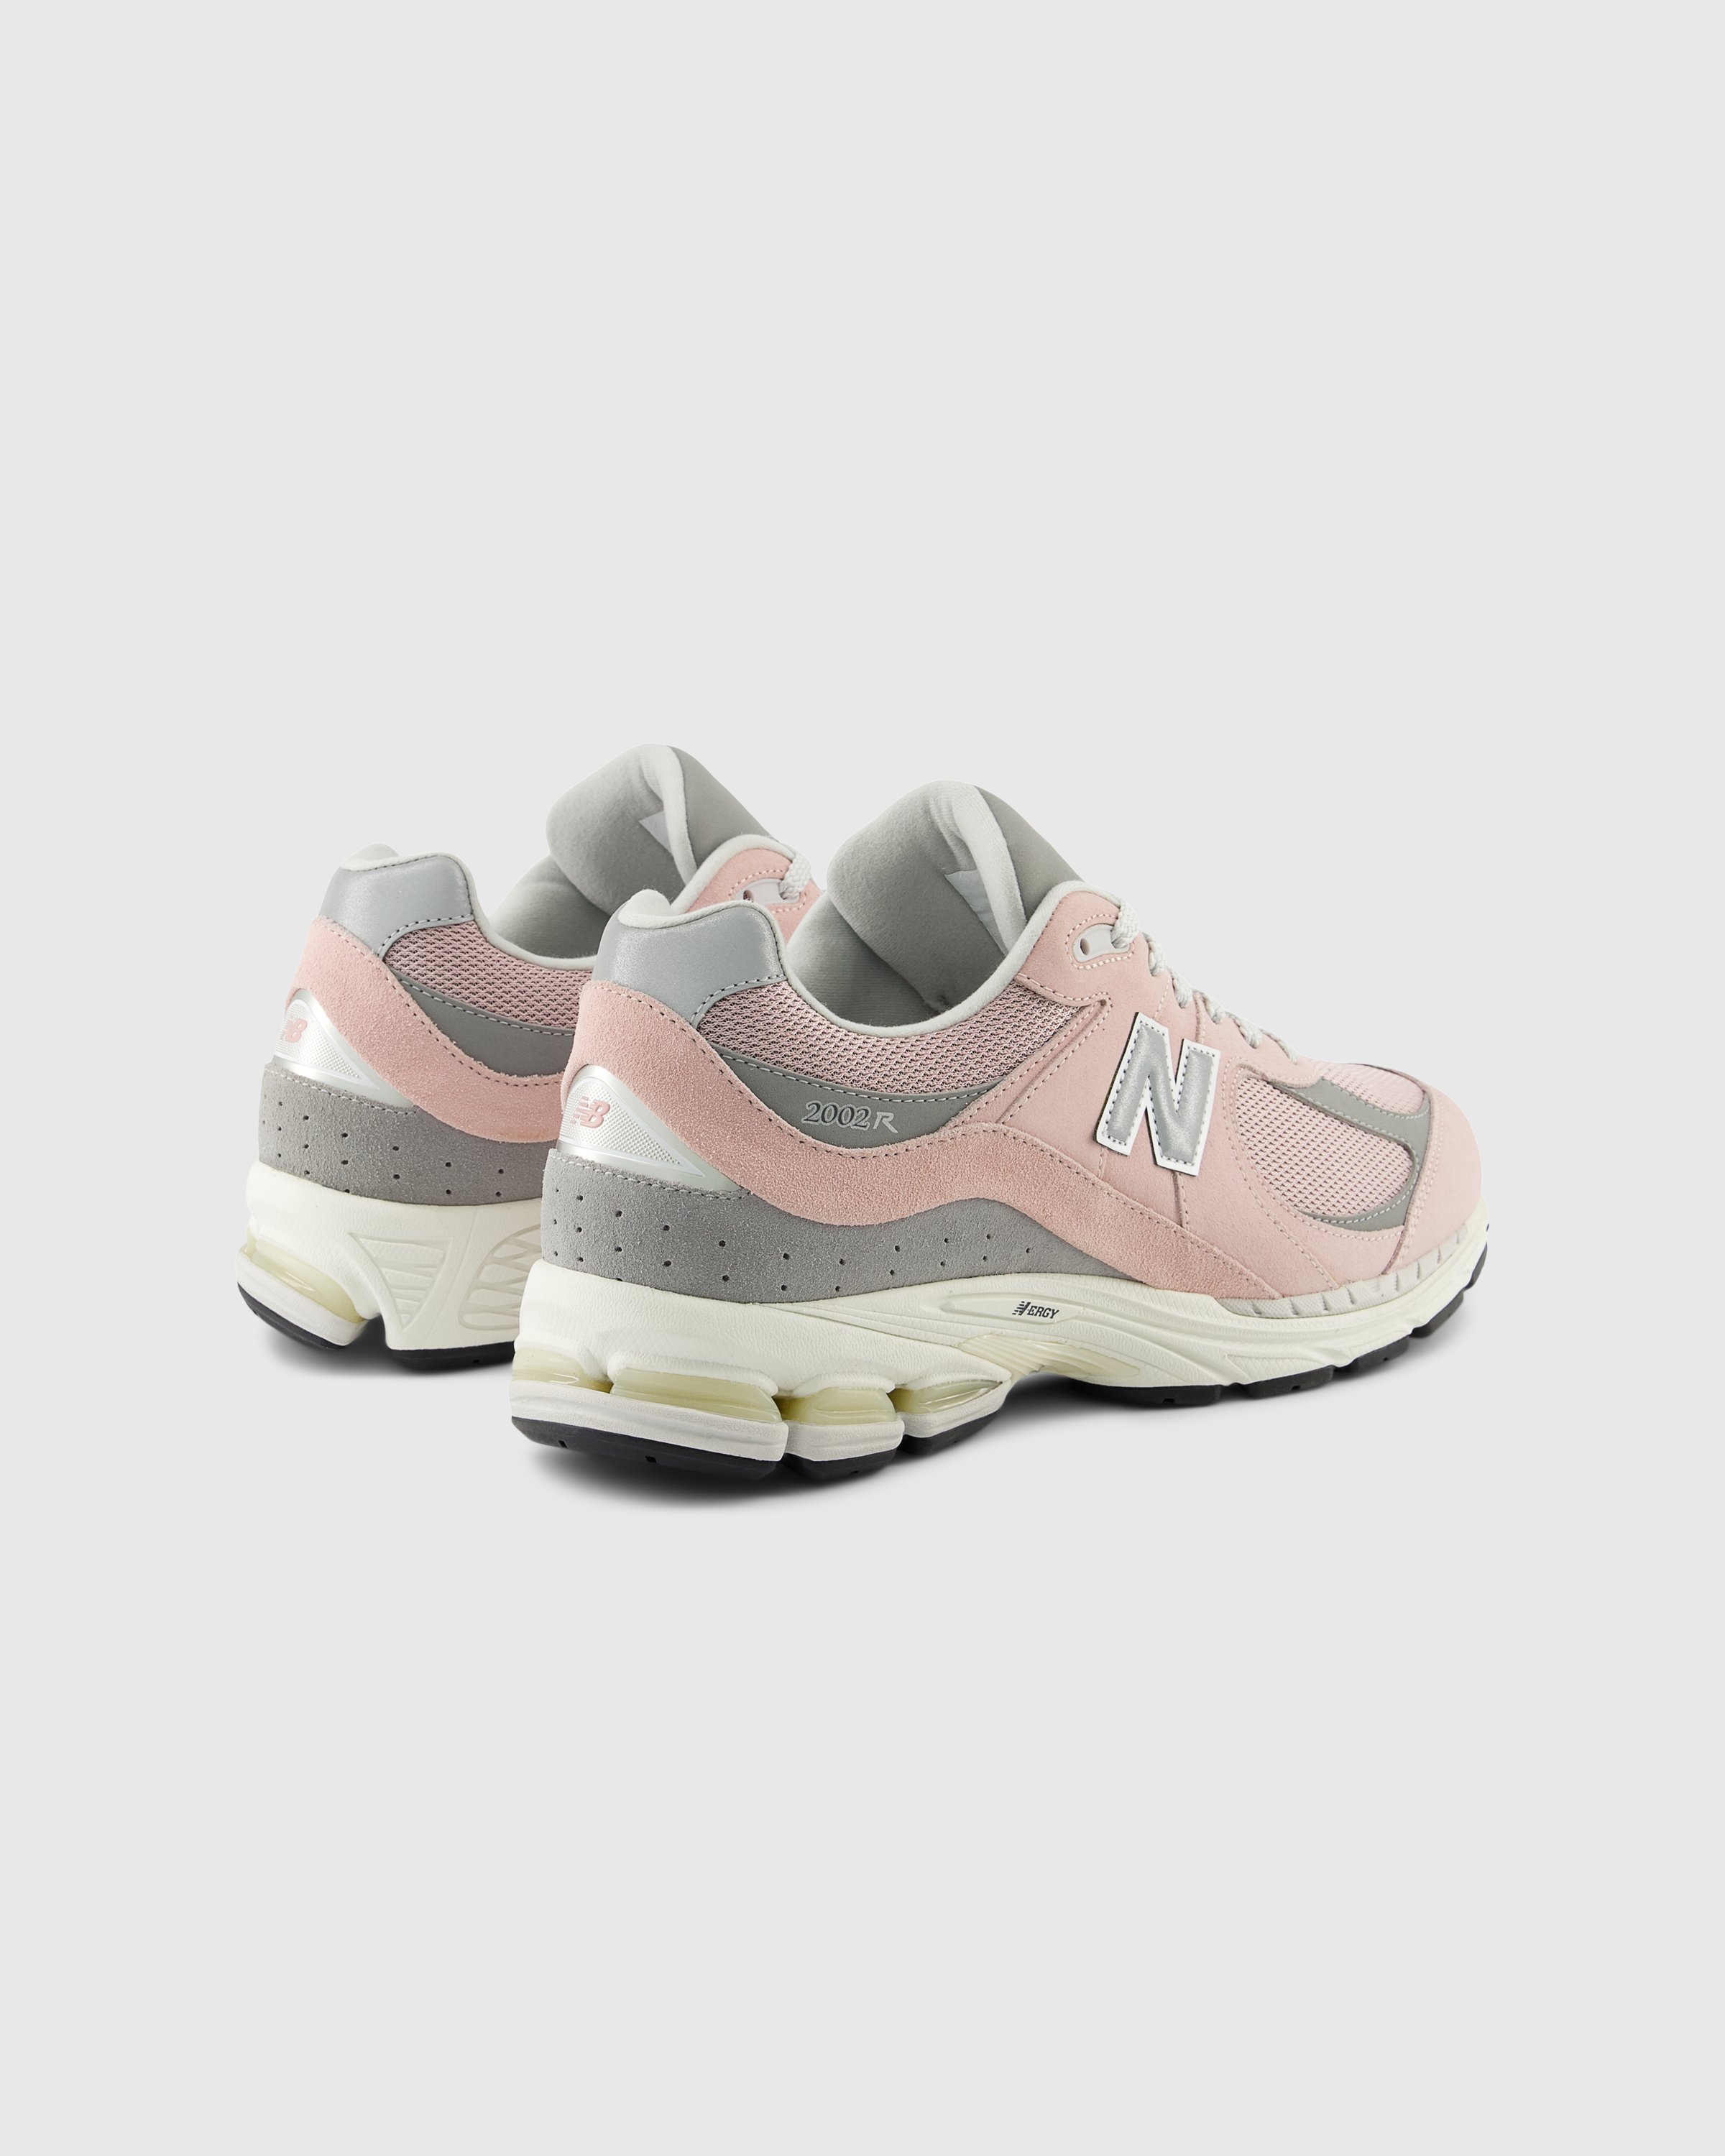 New Balance - M2002RFC ORB PINK - Footwear - Pink - Image 4